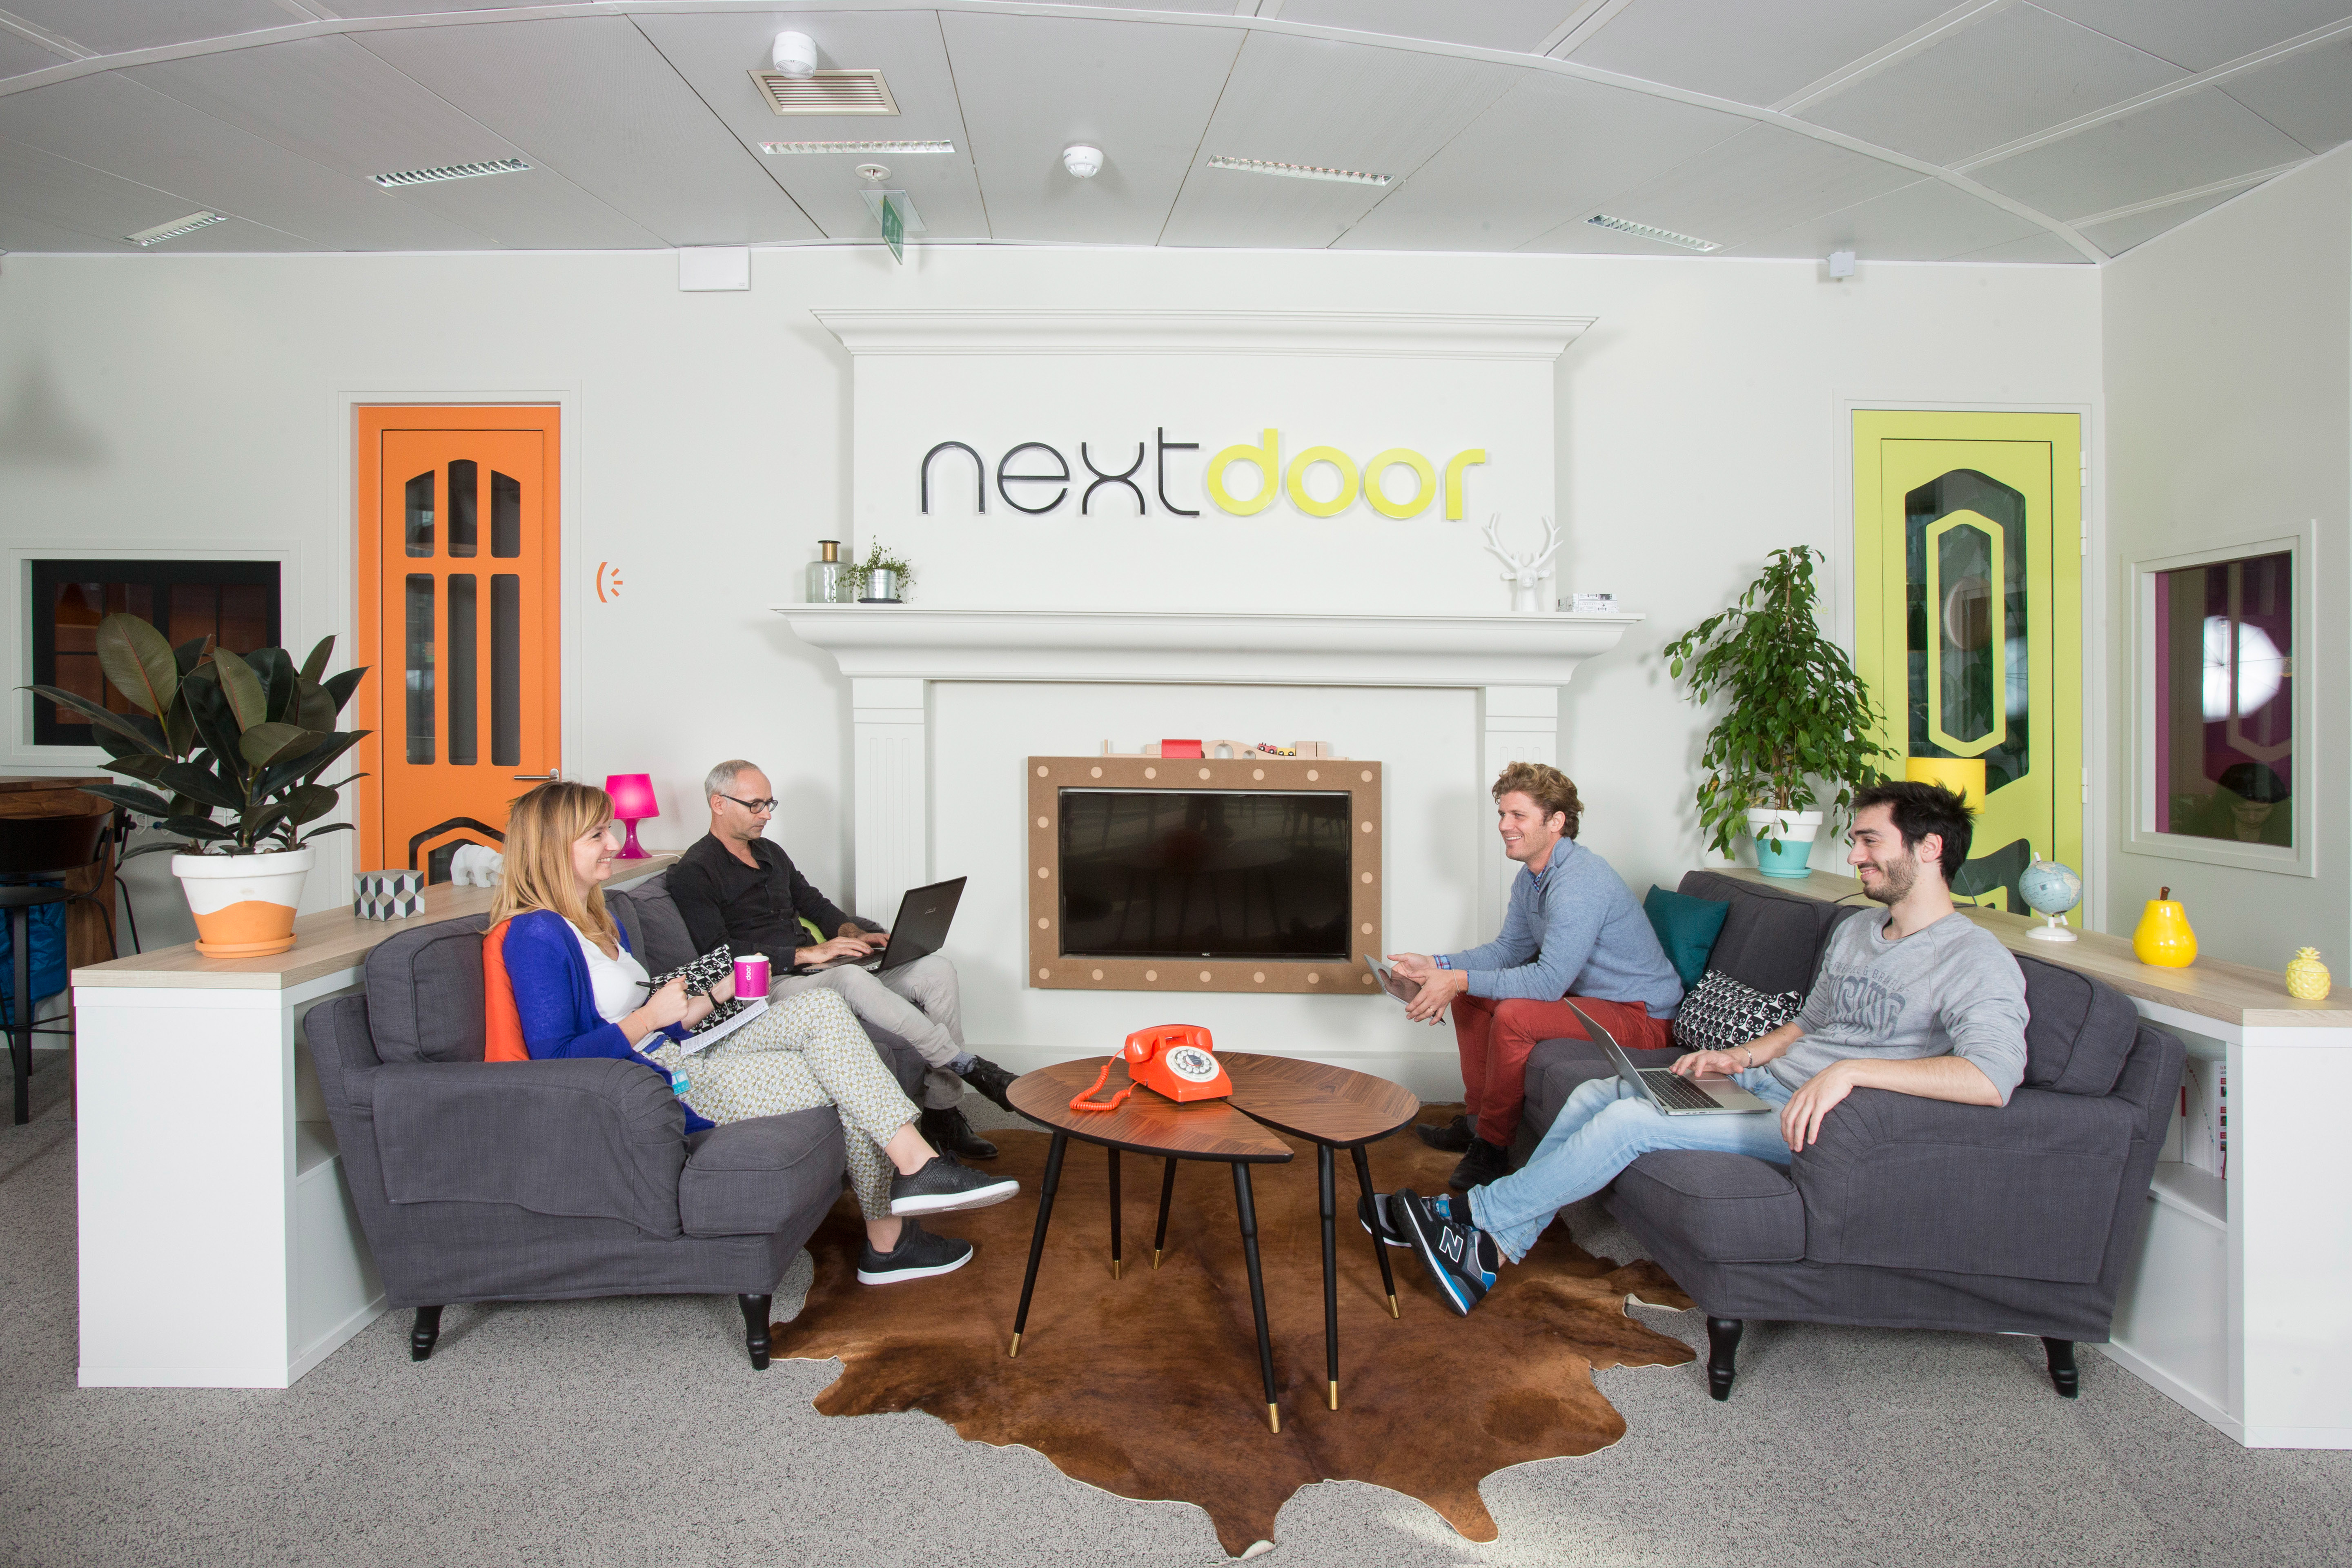 Accor Newsroom Nextdoor Aims To Be The European Leader In New